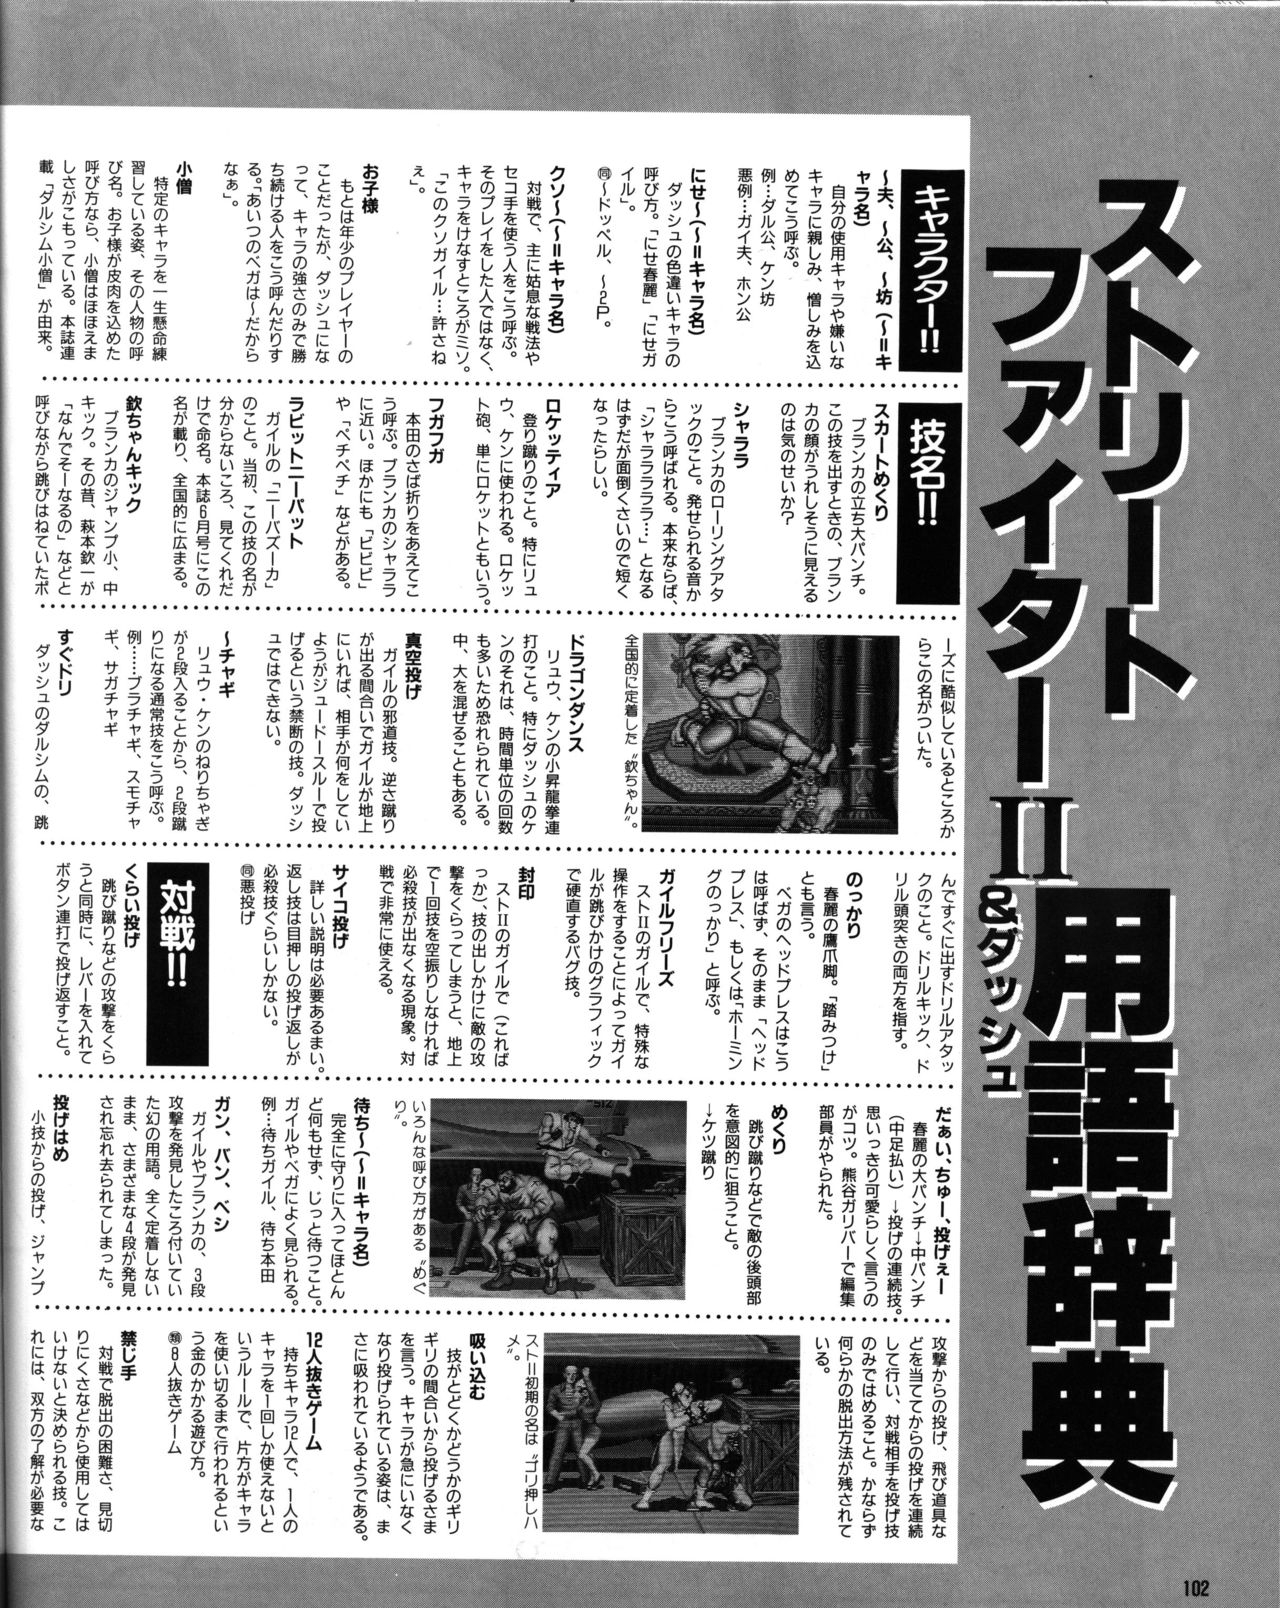 Street Fighter II Dash - Gamest special issue 77 103